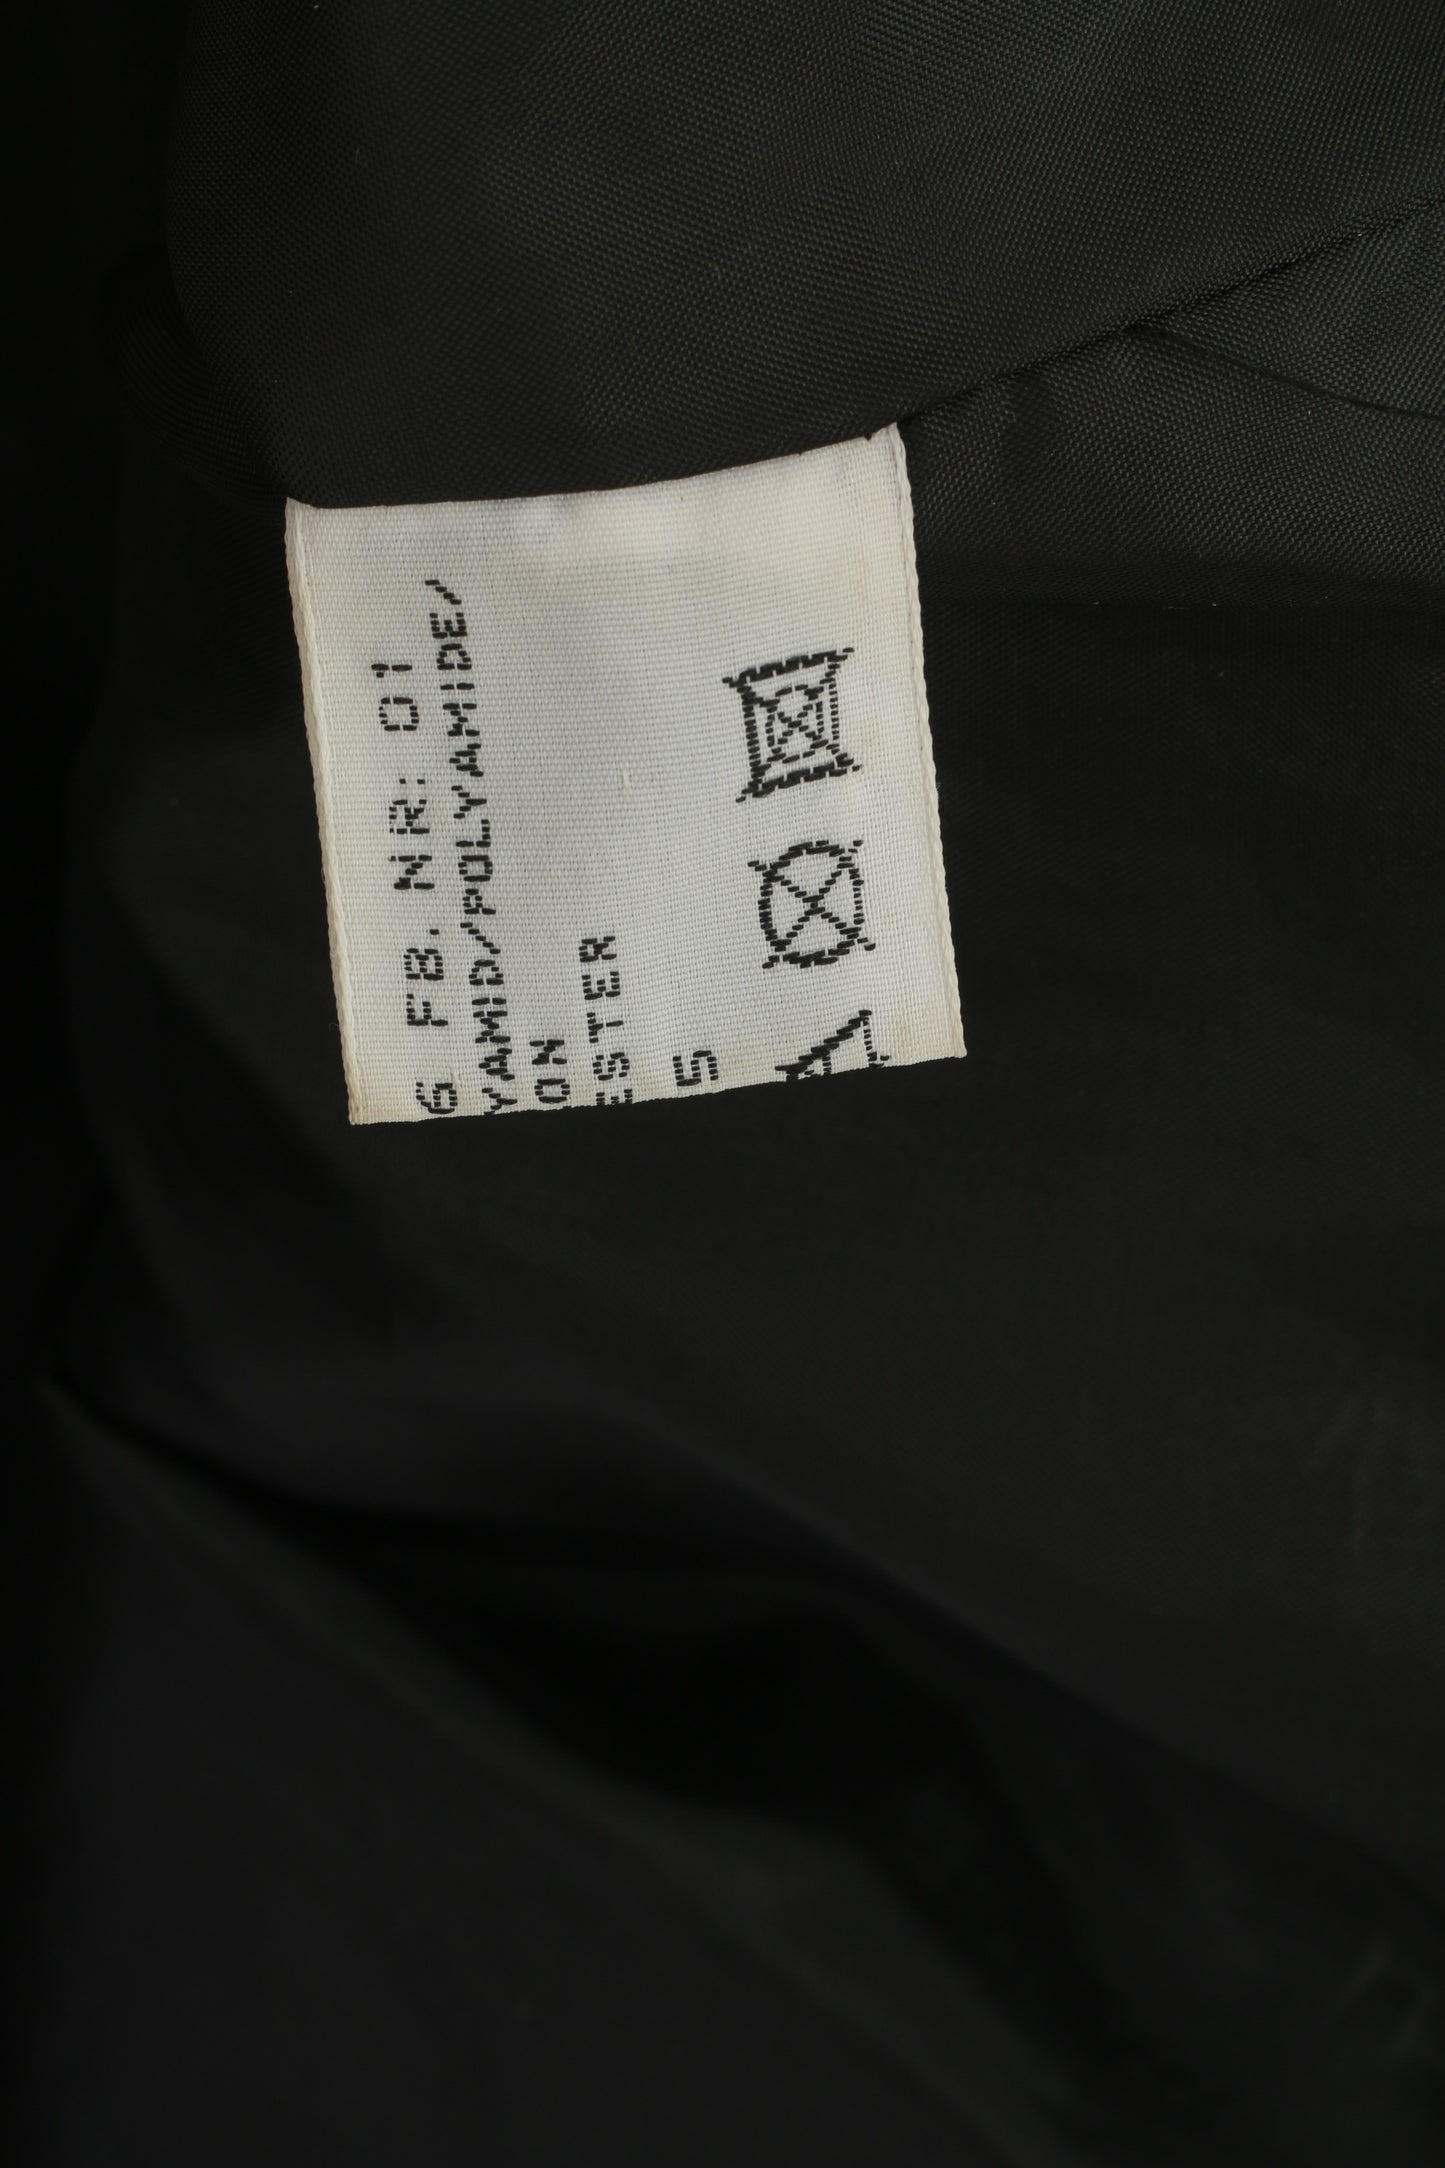 John F. Gee Jeanswear Uomo 52 XL Gilet Gilet senza maniche impermeabile in nylon nero